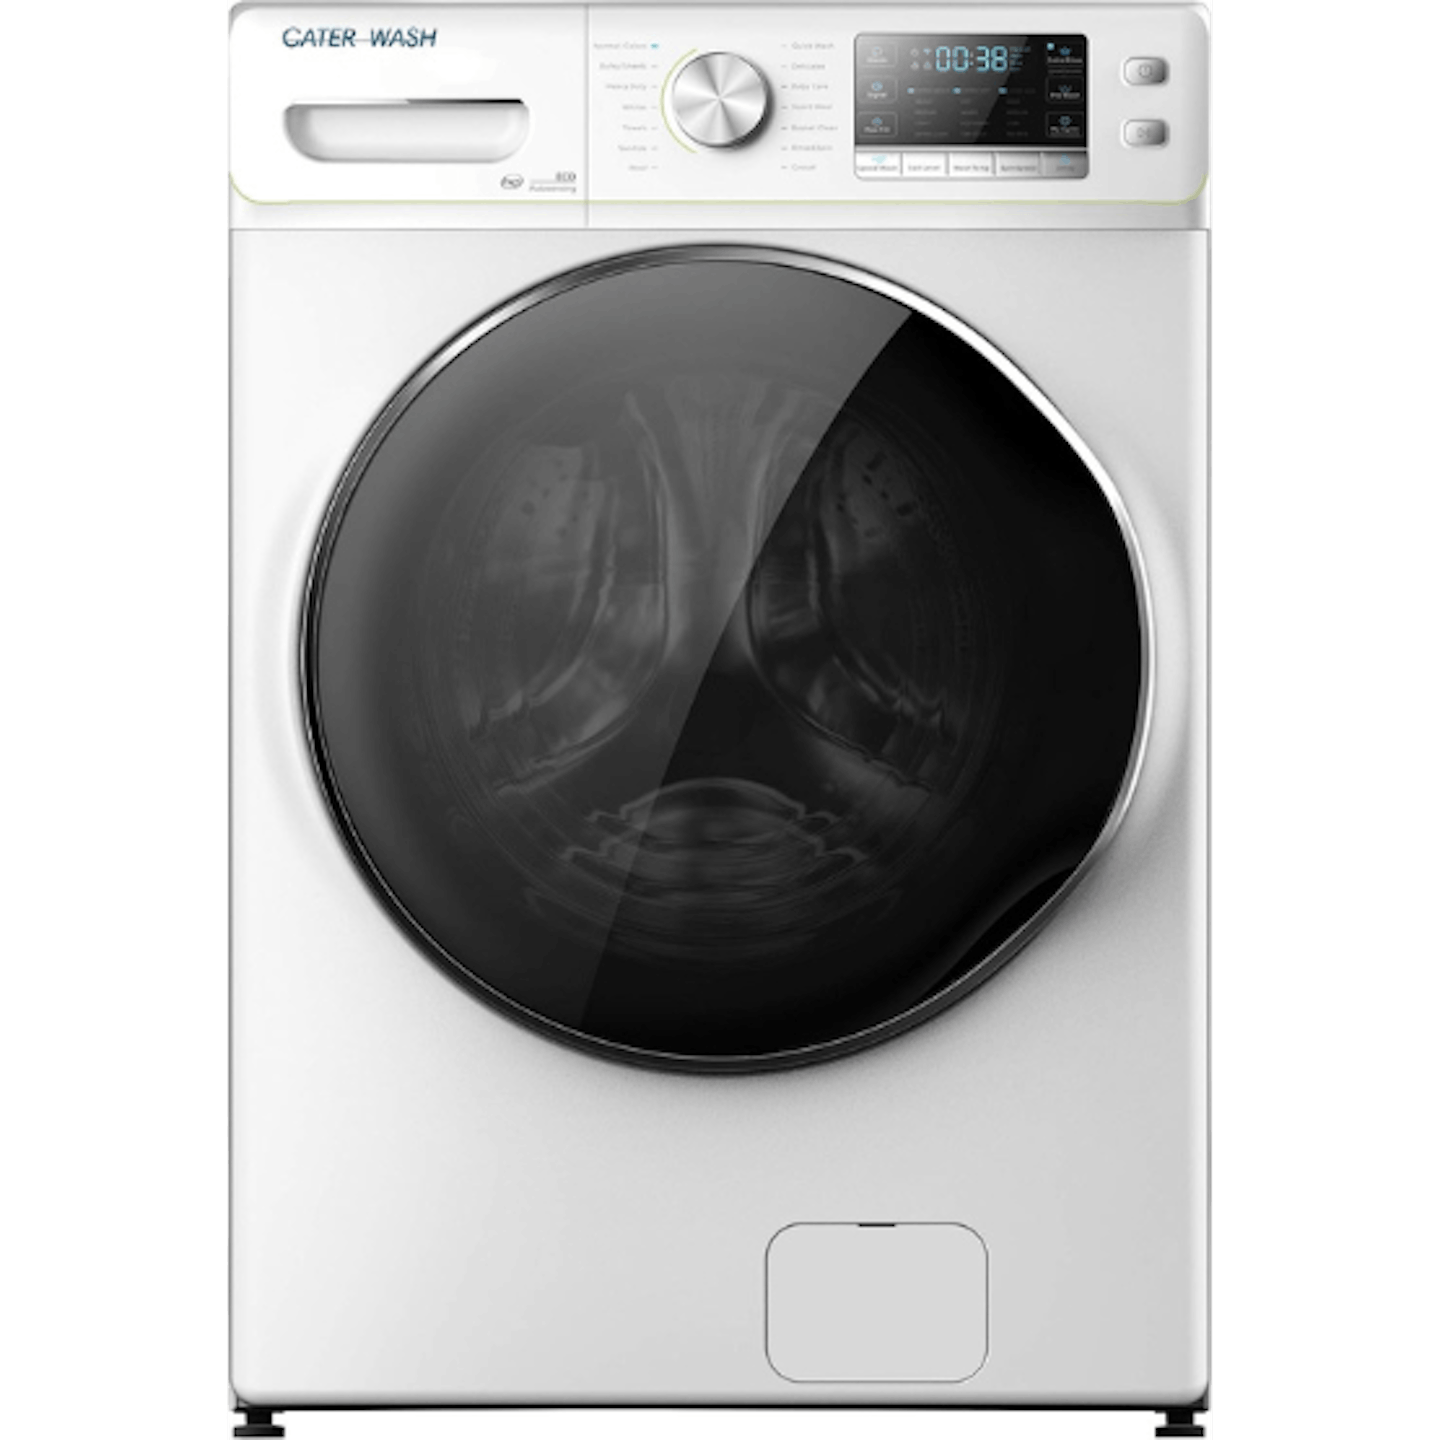 Cater wash washing machine